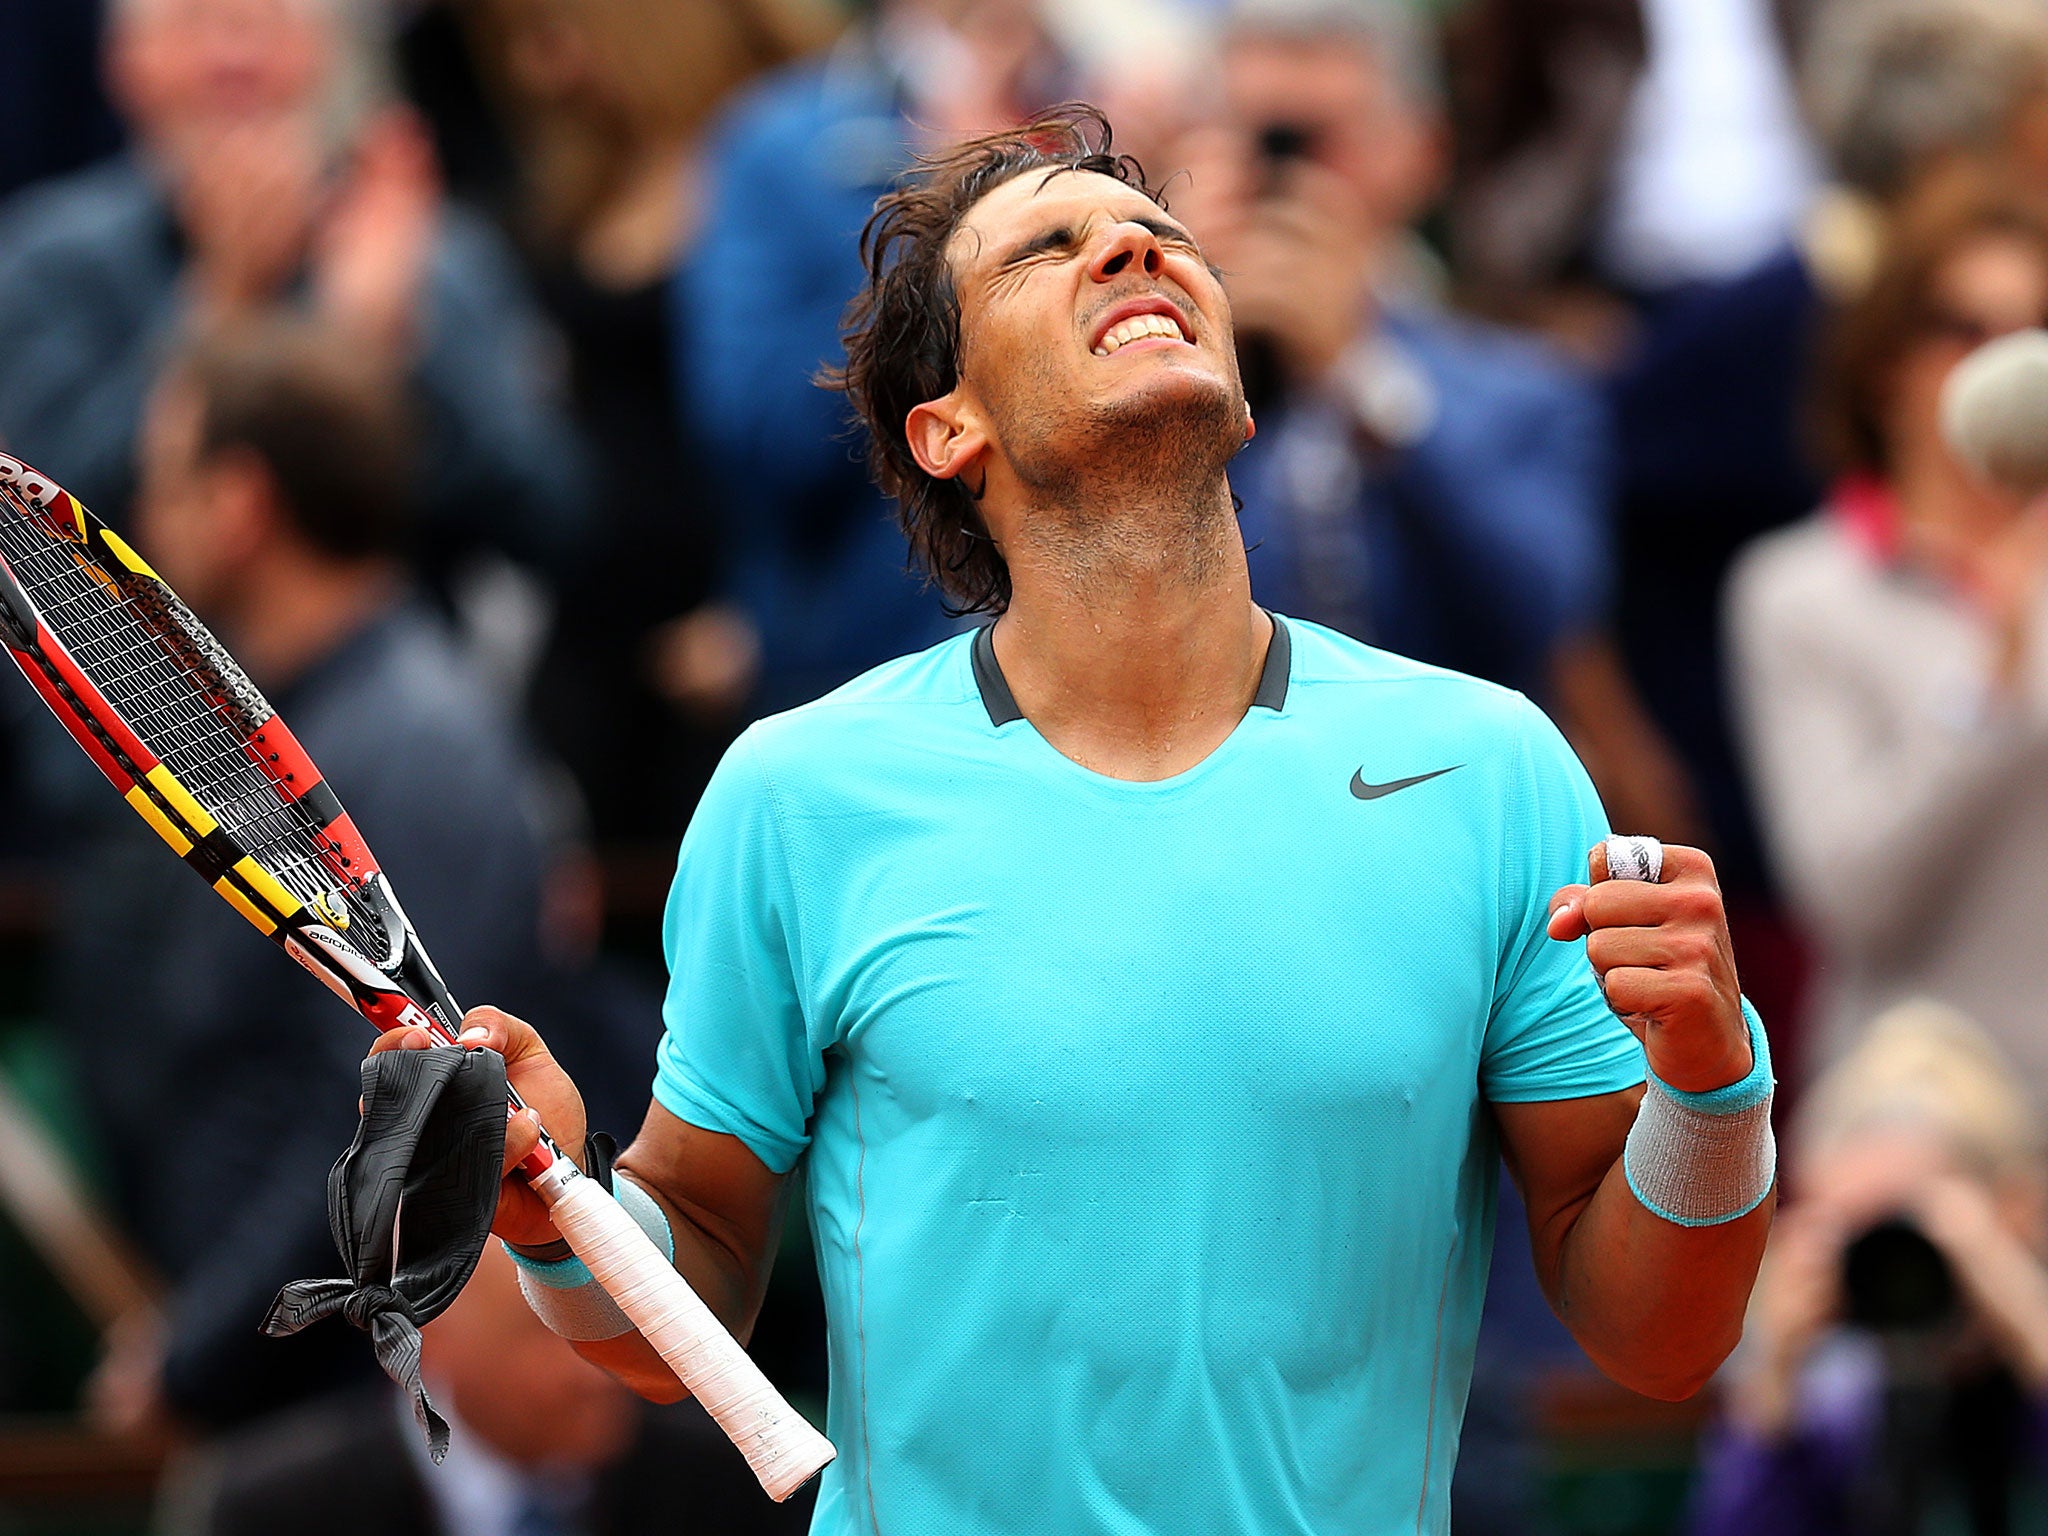 Rafael Nadal of Spain celebrates victory in his men's singles match against Dominic Thiem of Austria